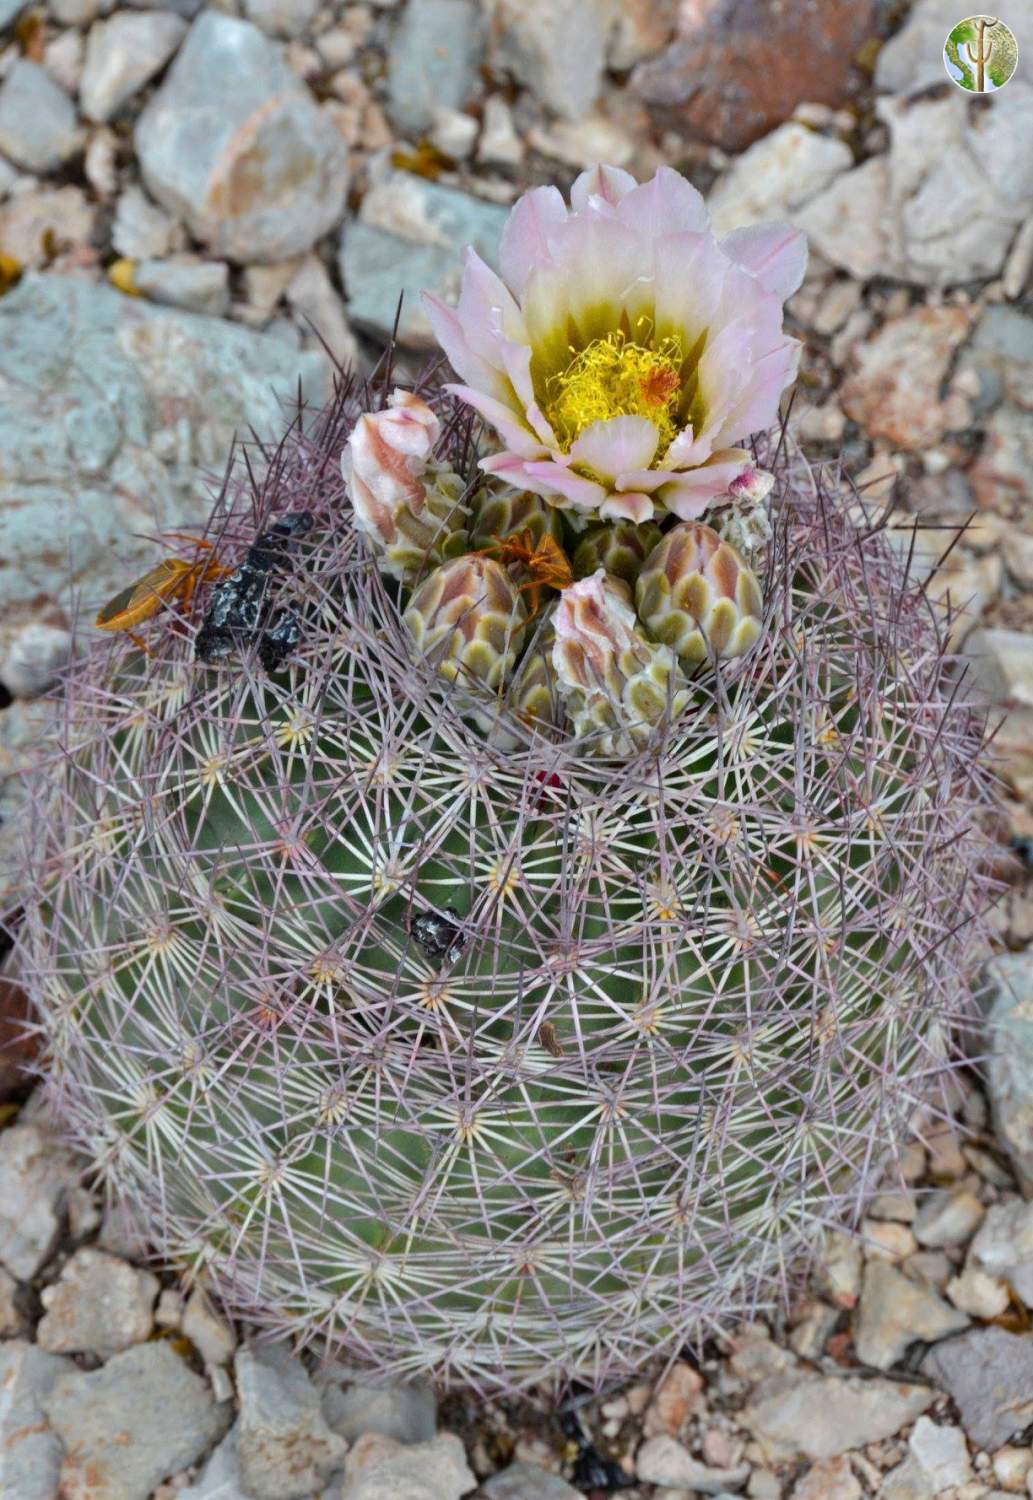 Echinomastus erectocentrus var. erectocentrus Needle-Spined Pineapple Cactus